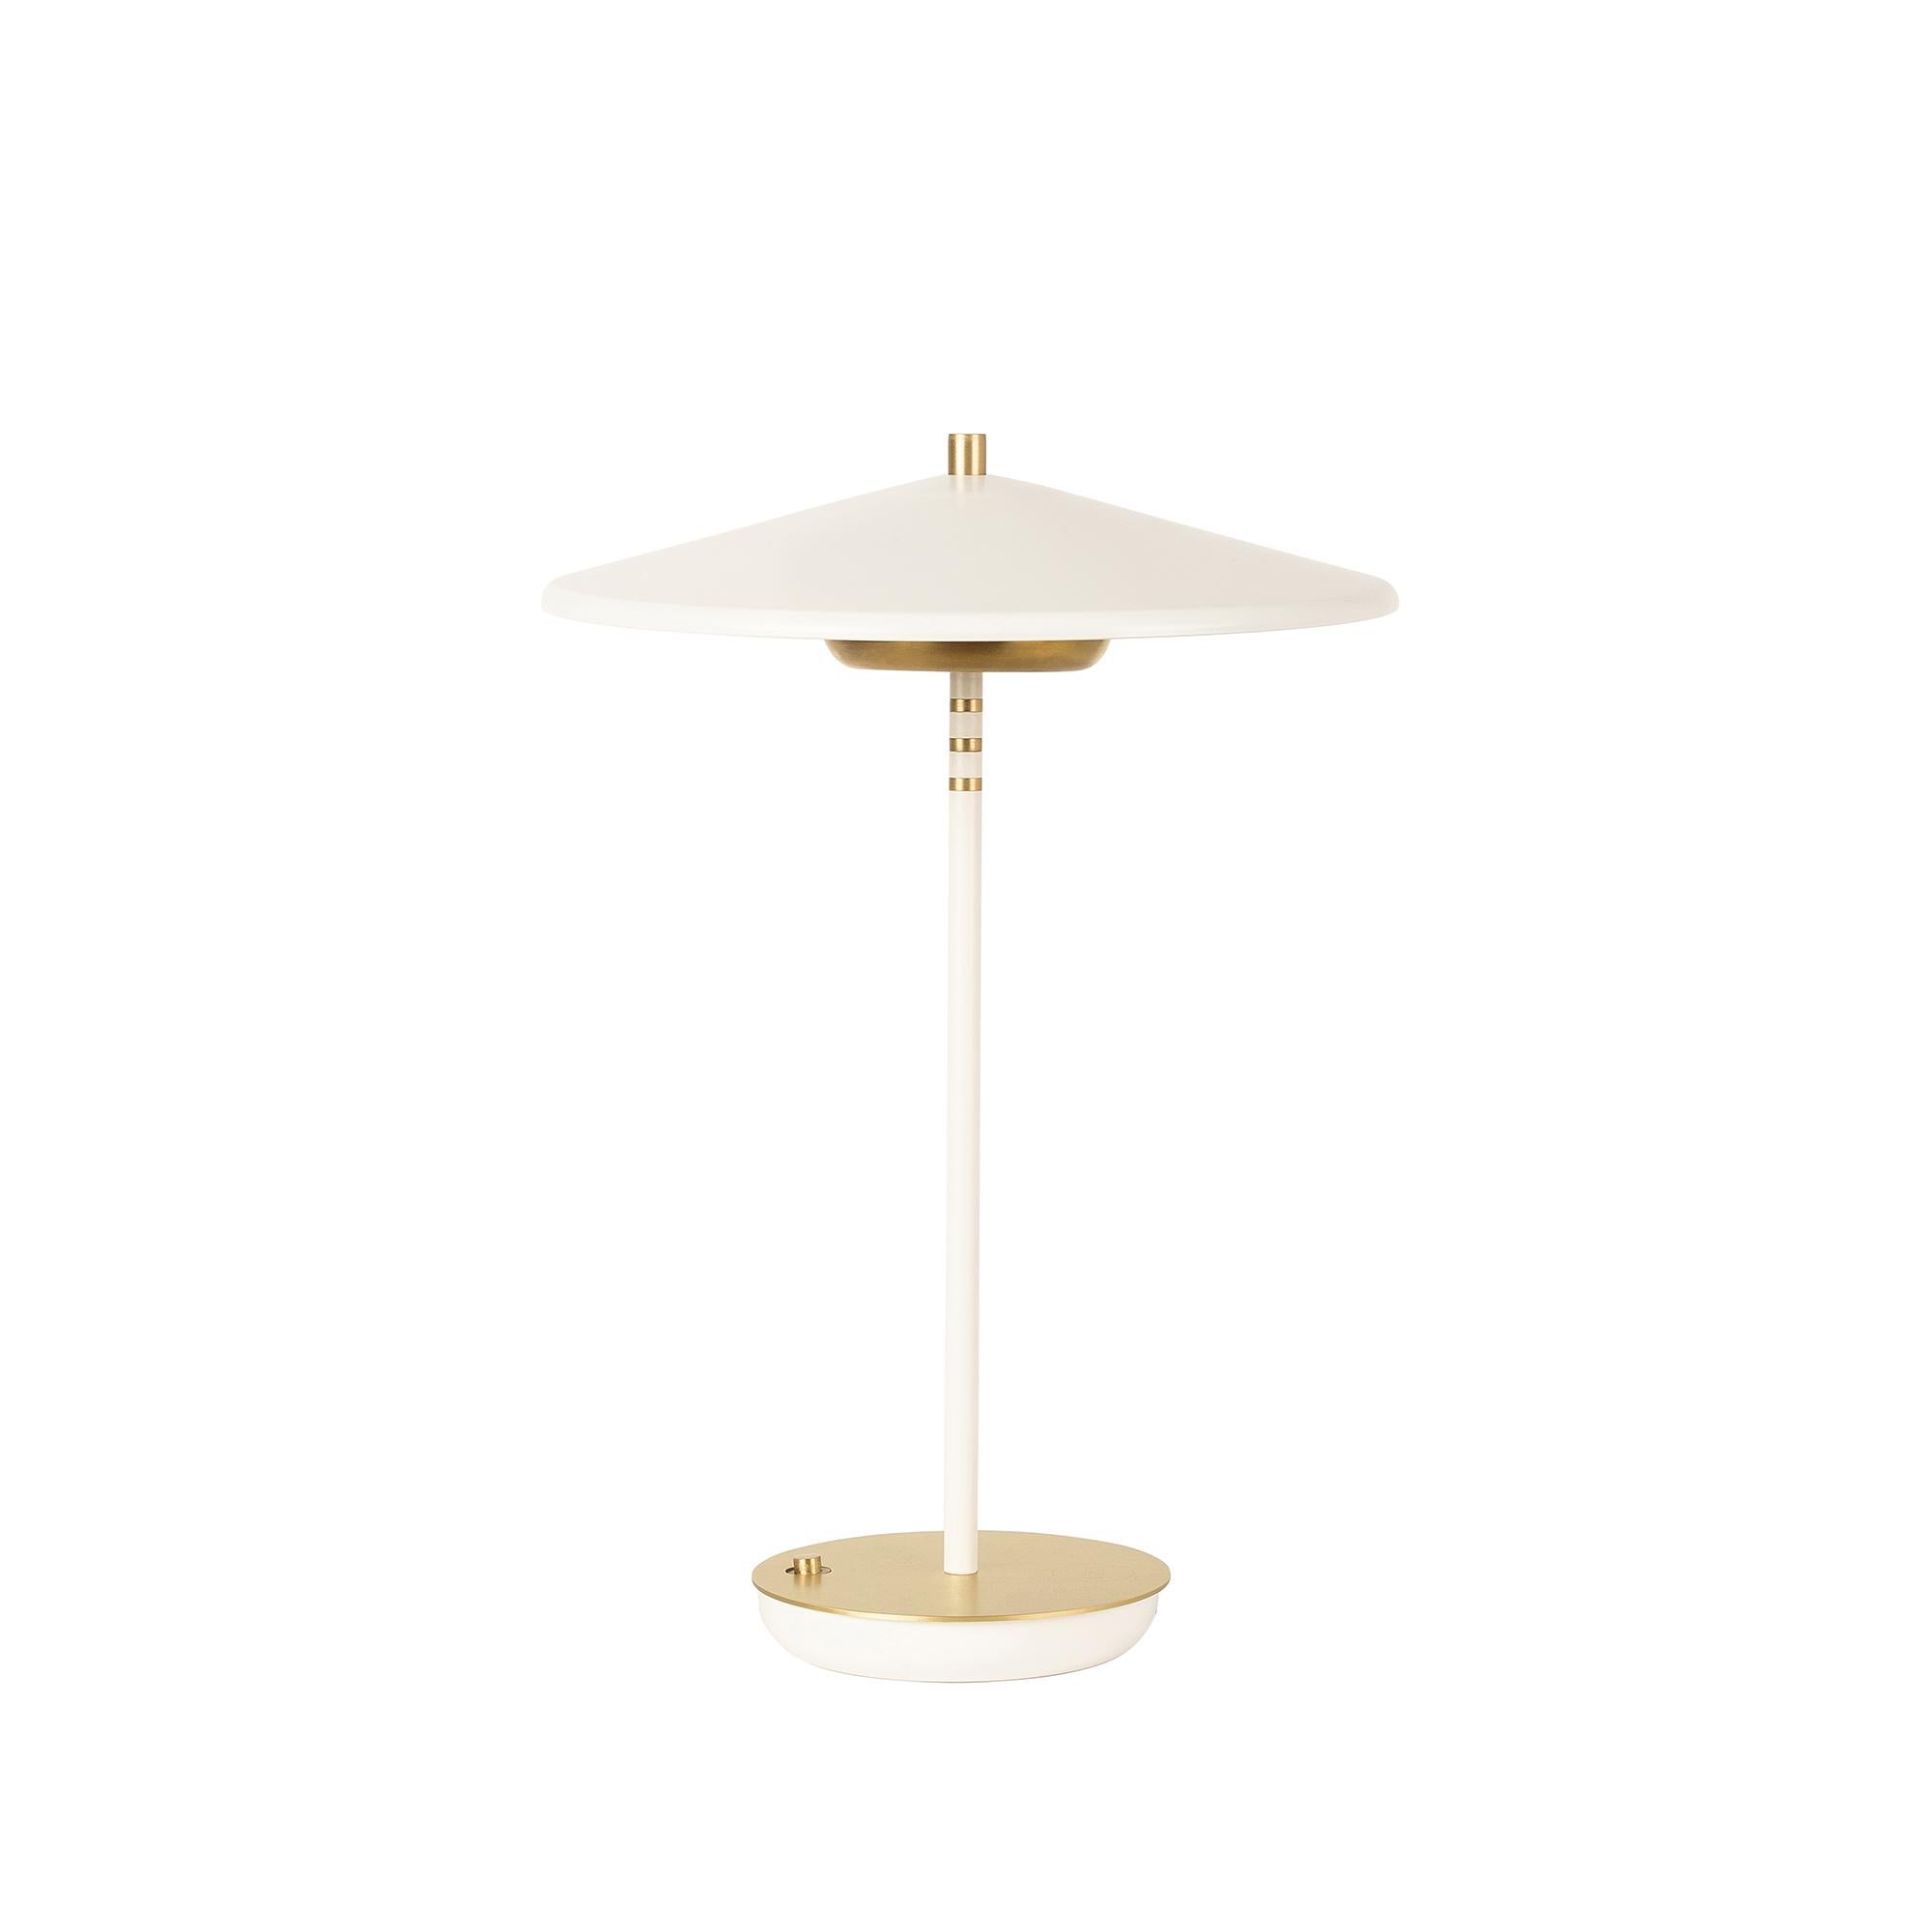 Turkish Artist Brass Tilting Table Lamp, White & Gold, Parisian Beret Desk Lamp